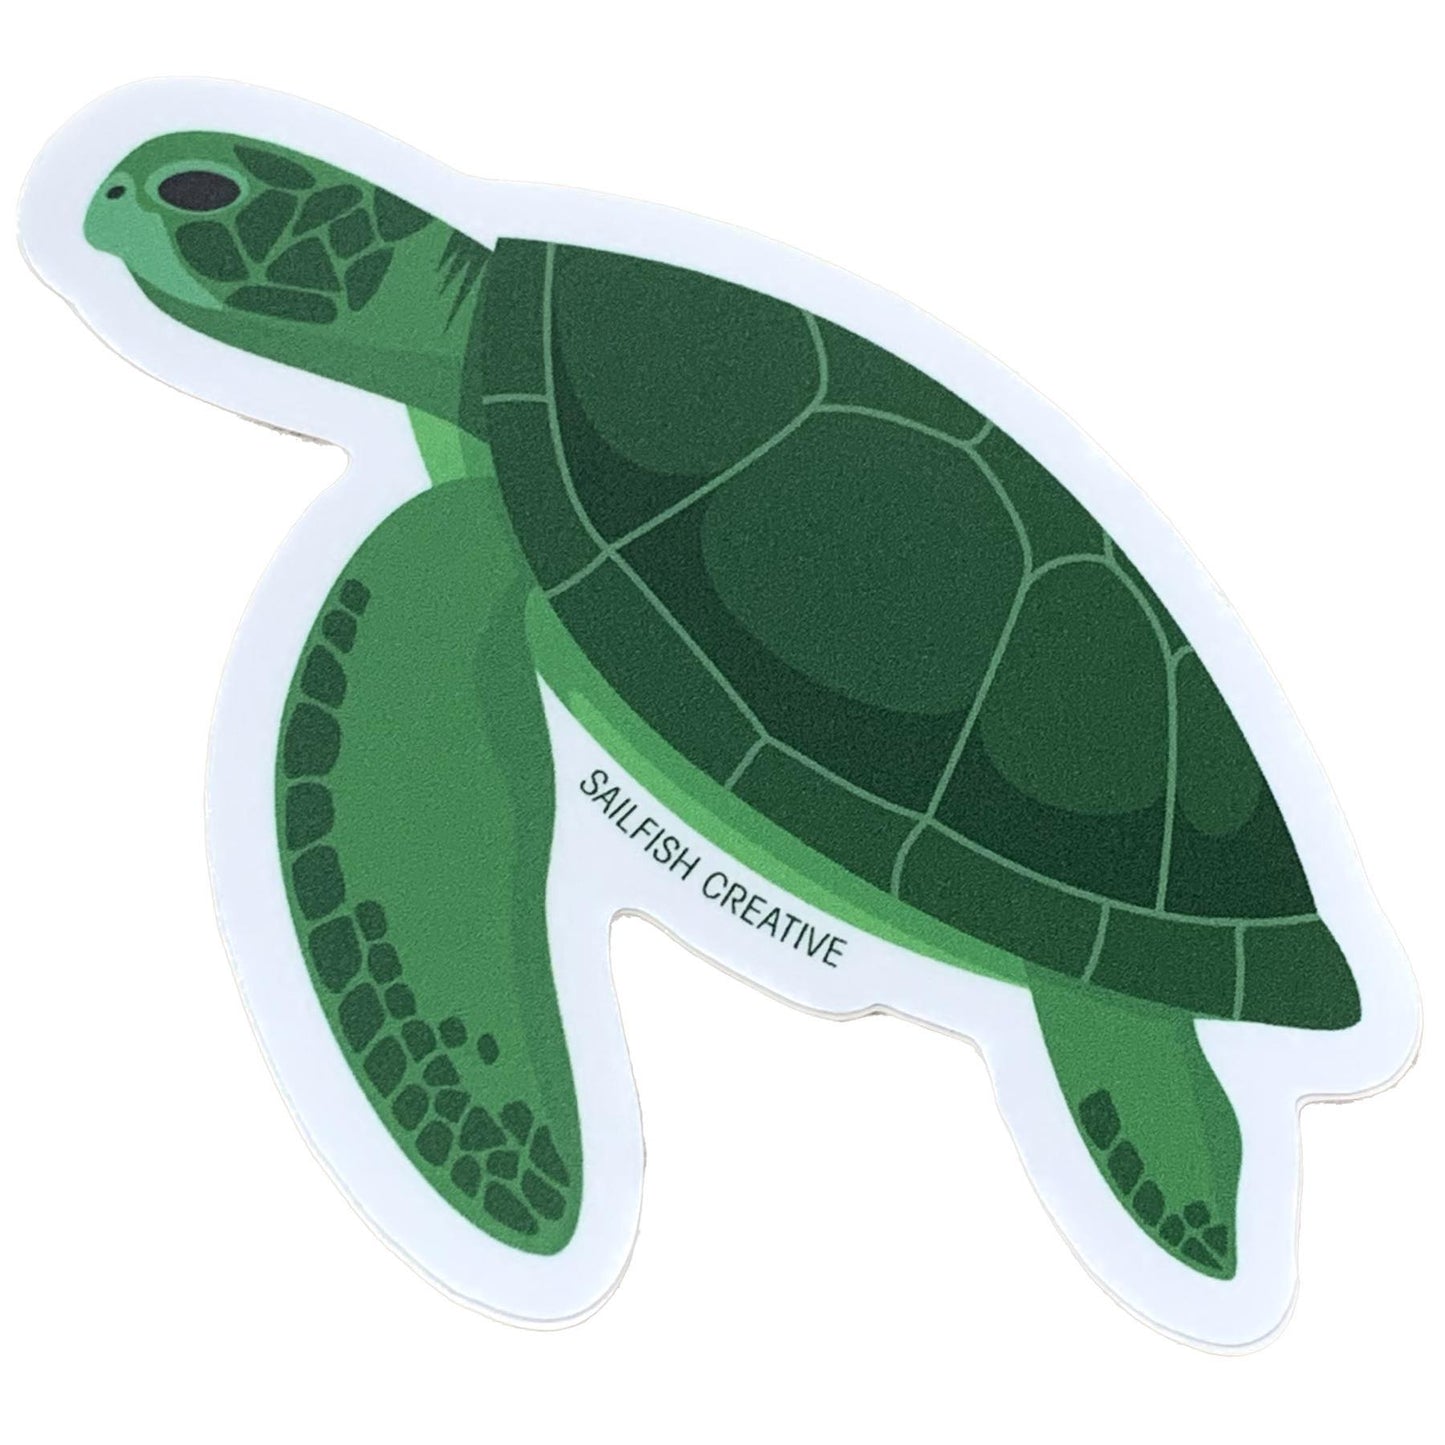 SAILFISH CREATIVE- "Green Turtle" Vinyl Sticker